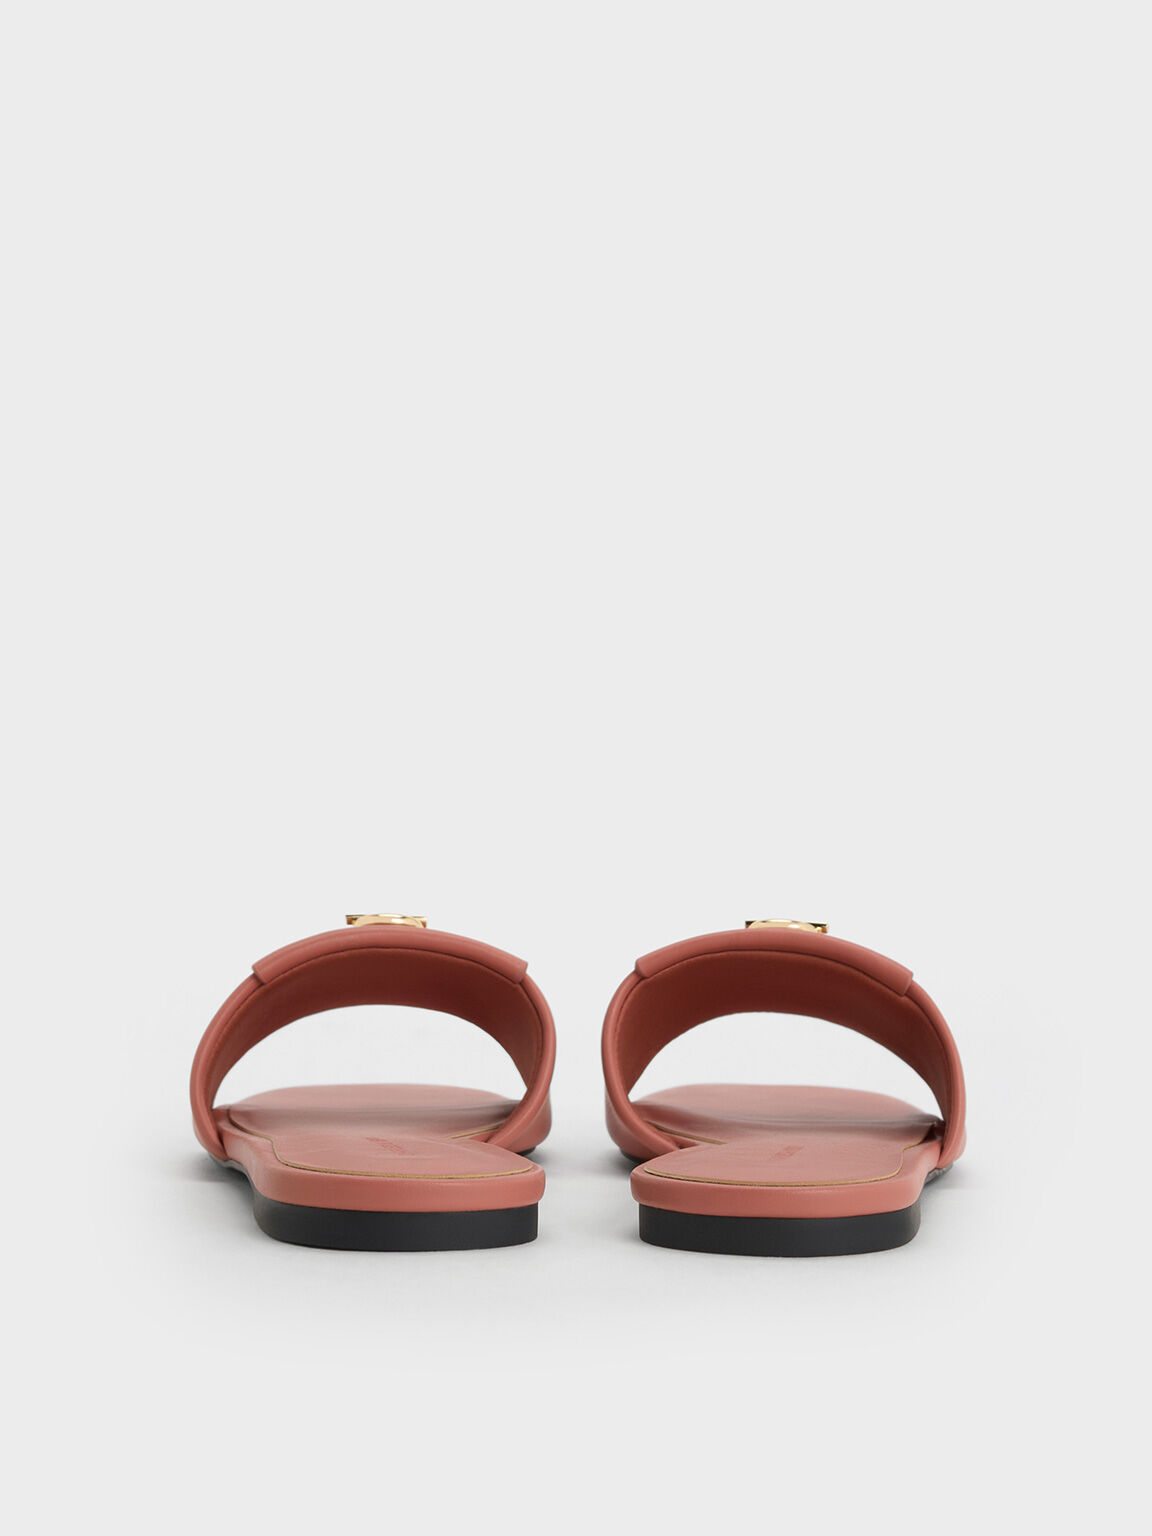 Metallic-Accent Slide Sandals, Pink, hi-res